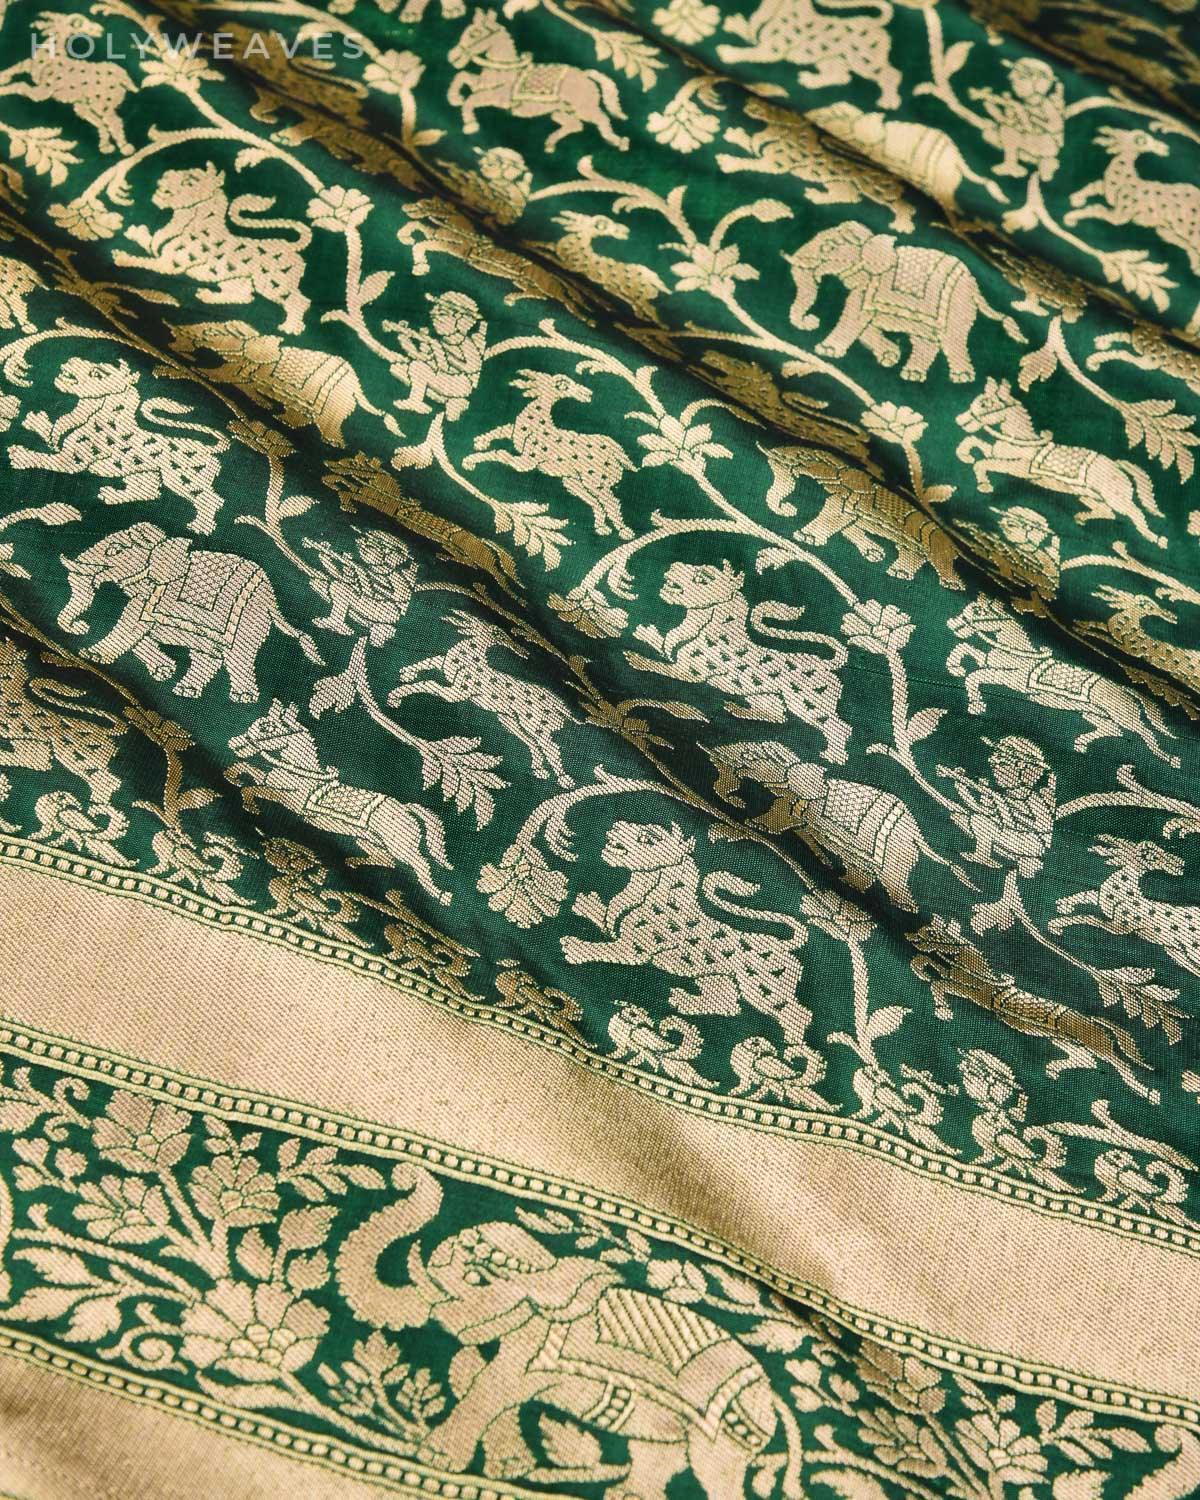 Sacramento Green Banarasi Shikargah Cutwork Brocade Handwoven Katan Silk Saree with Elephant Trail Border - By HolyWeaves, Benares